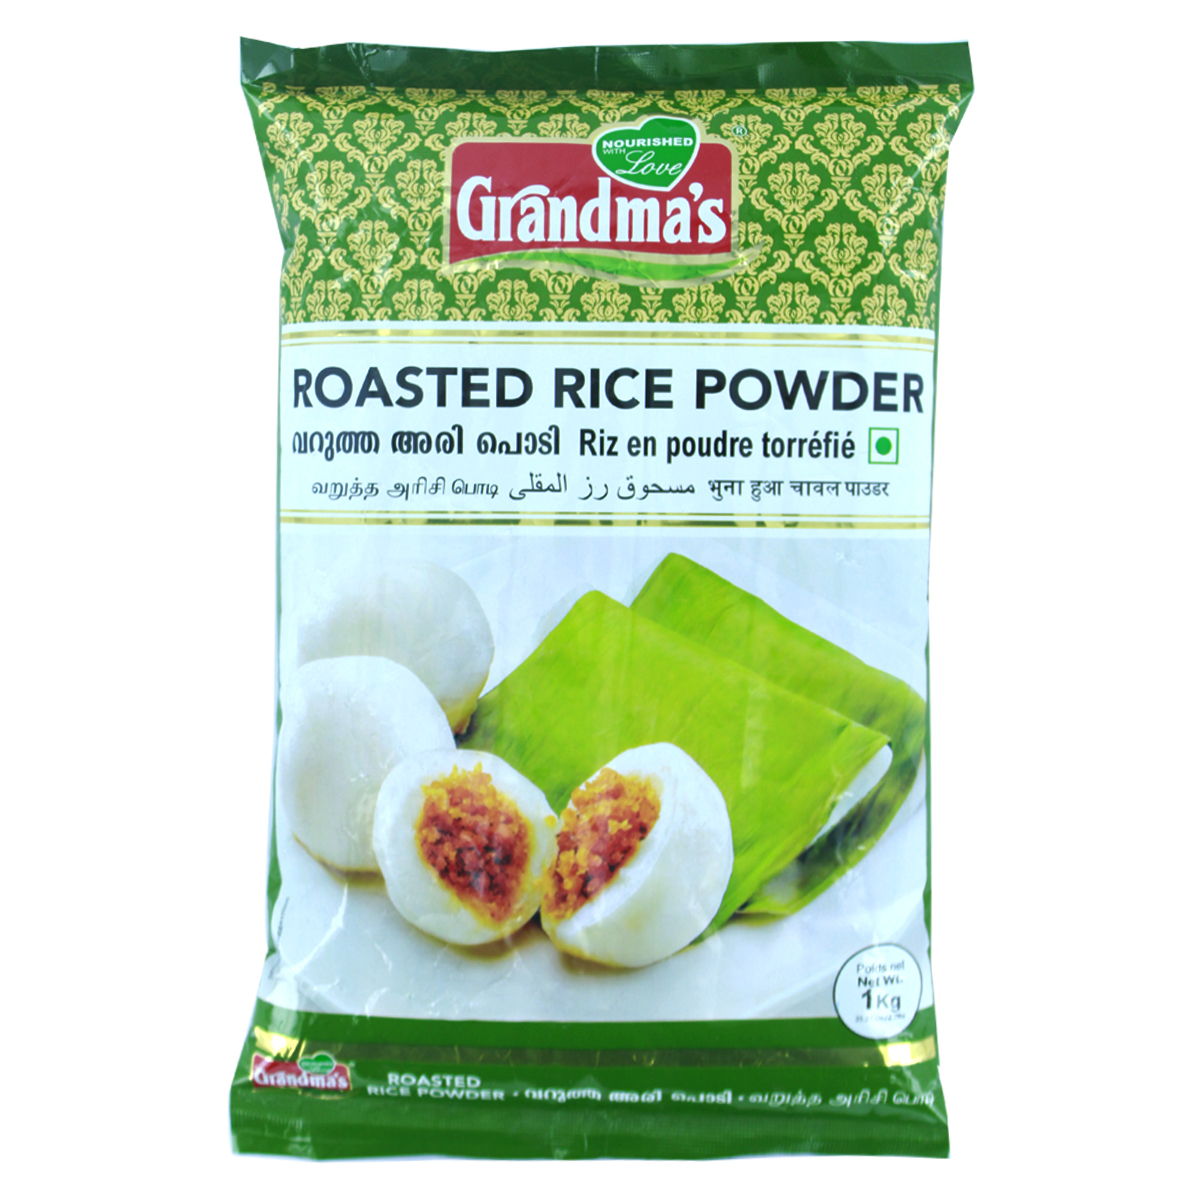 Grandmas Roasted Rice Powder 1kg